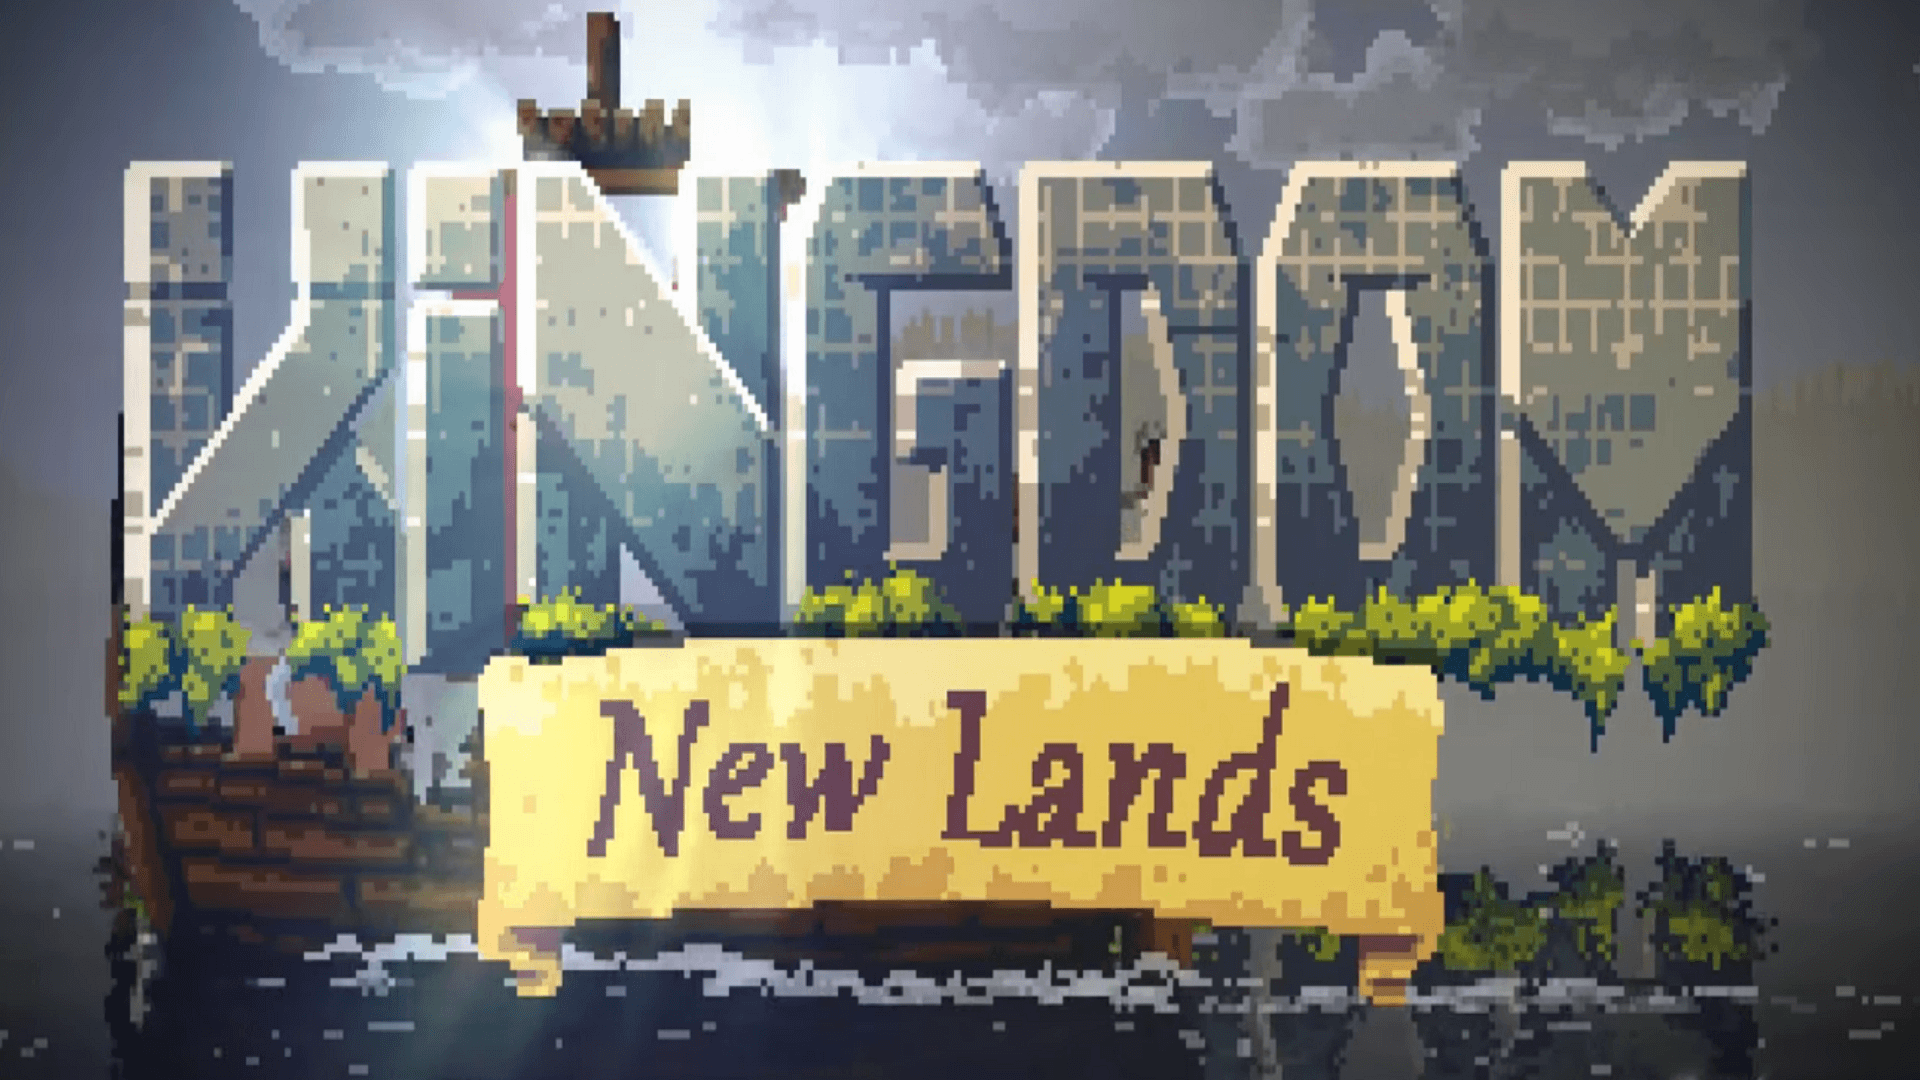 New lands 1